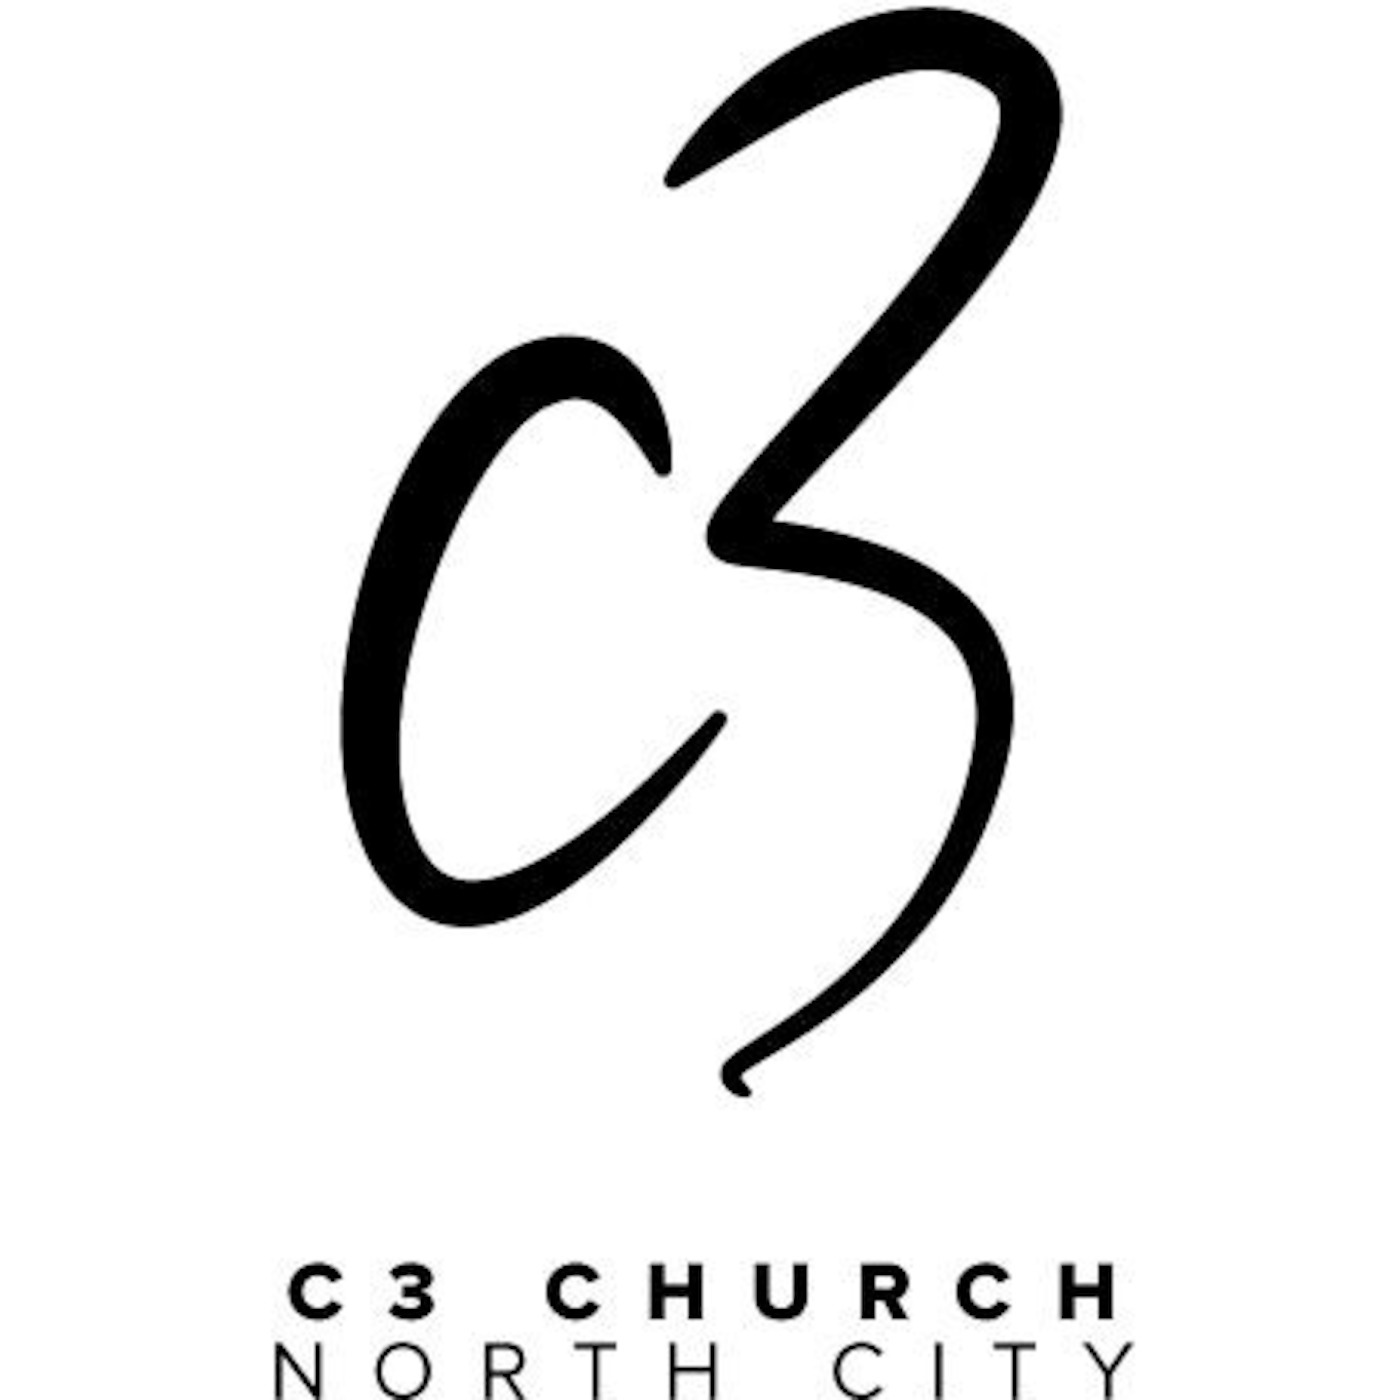 c3 Church North City Hamilton NZ